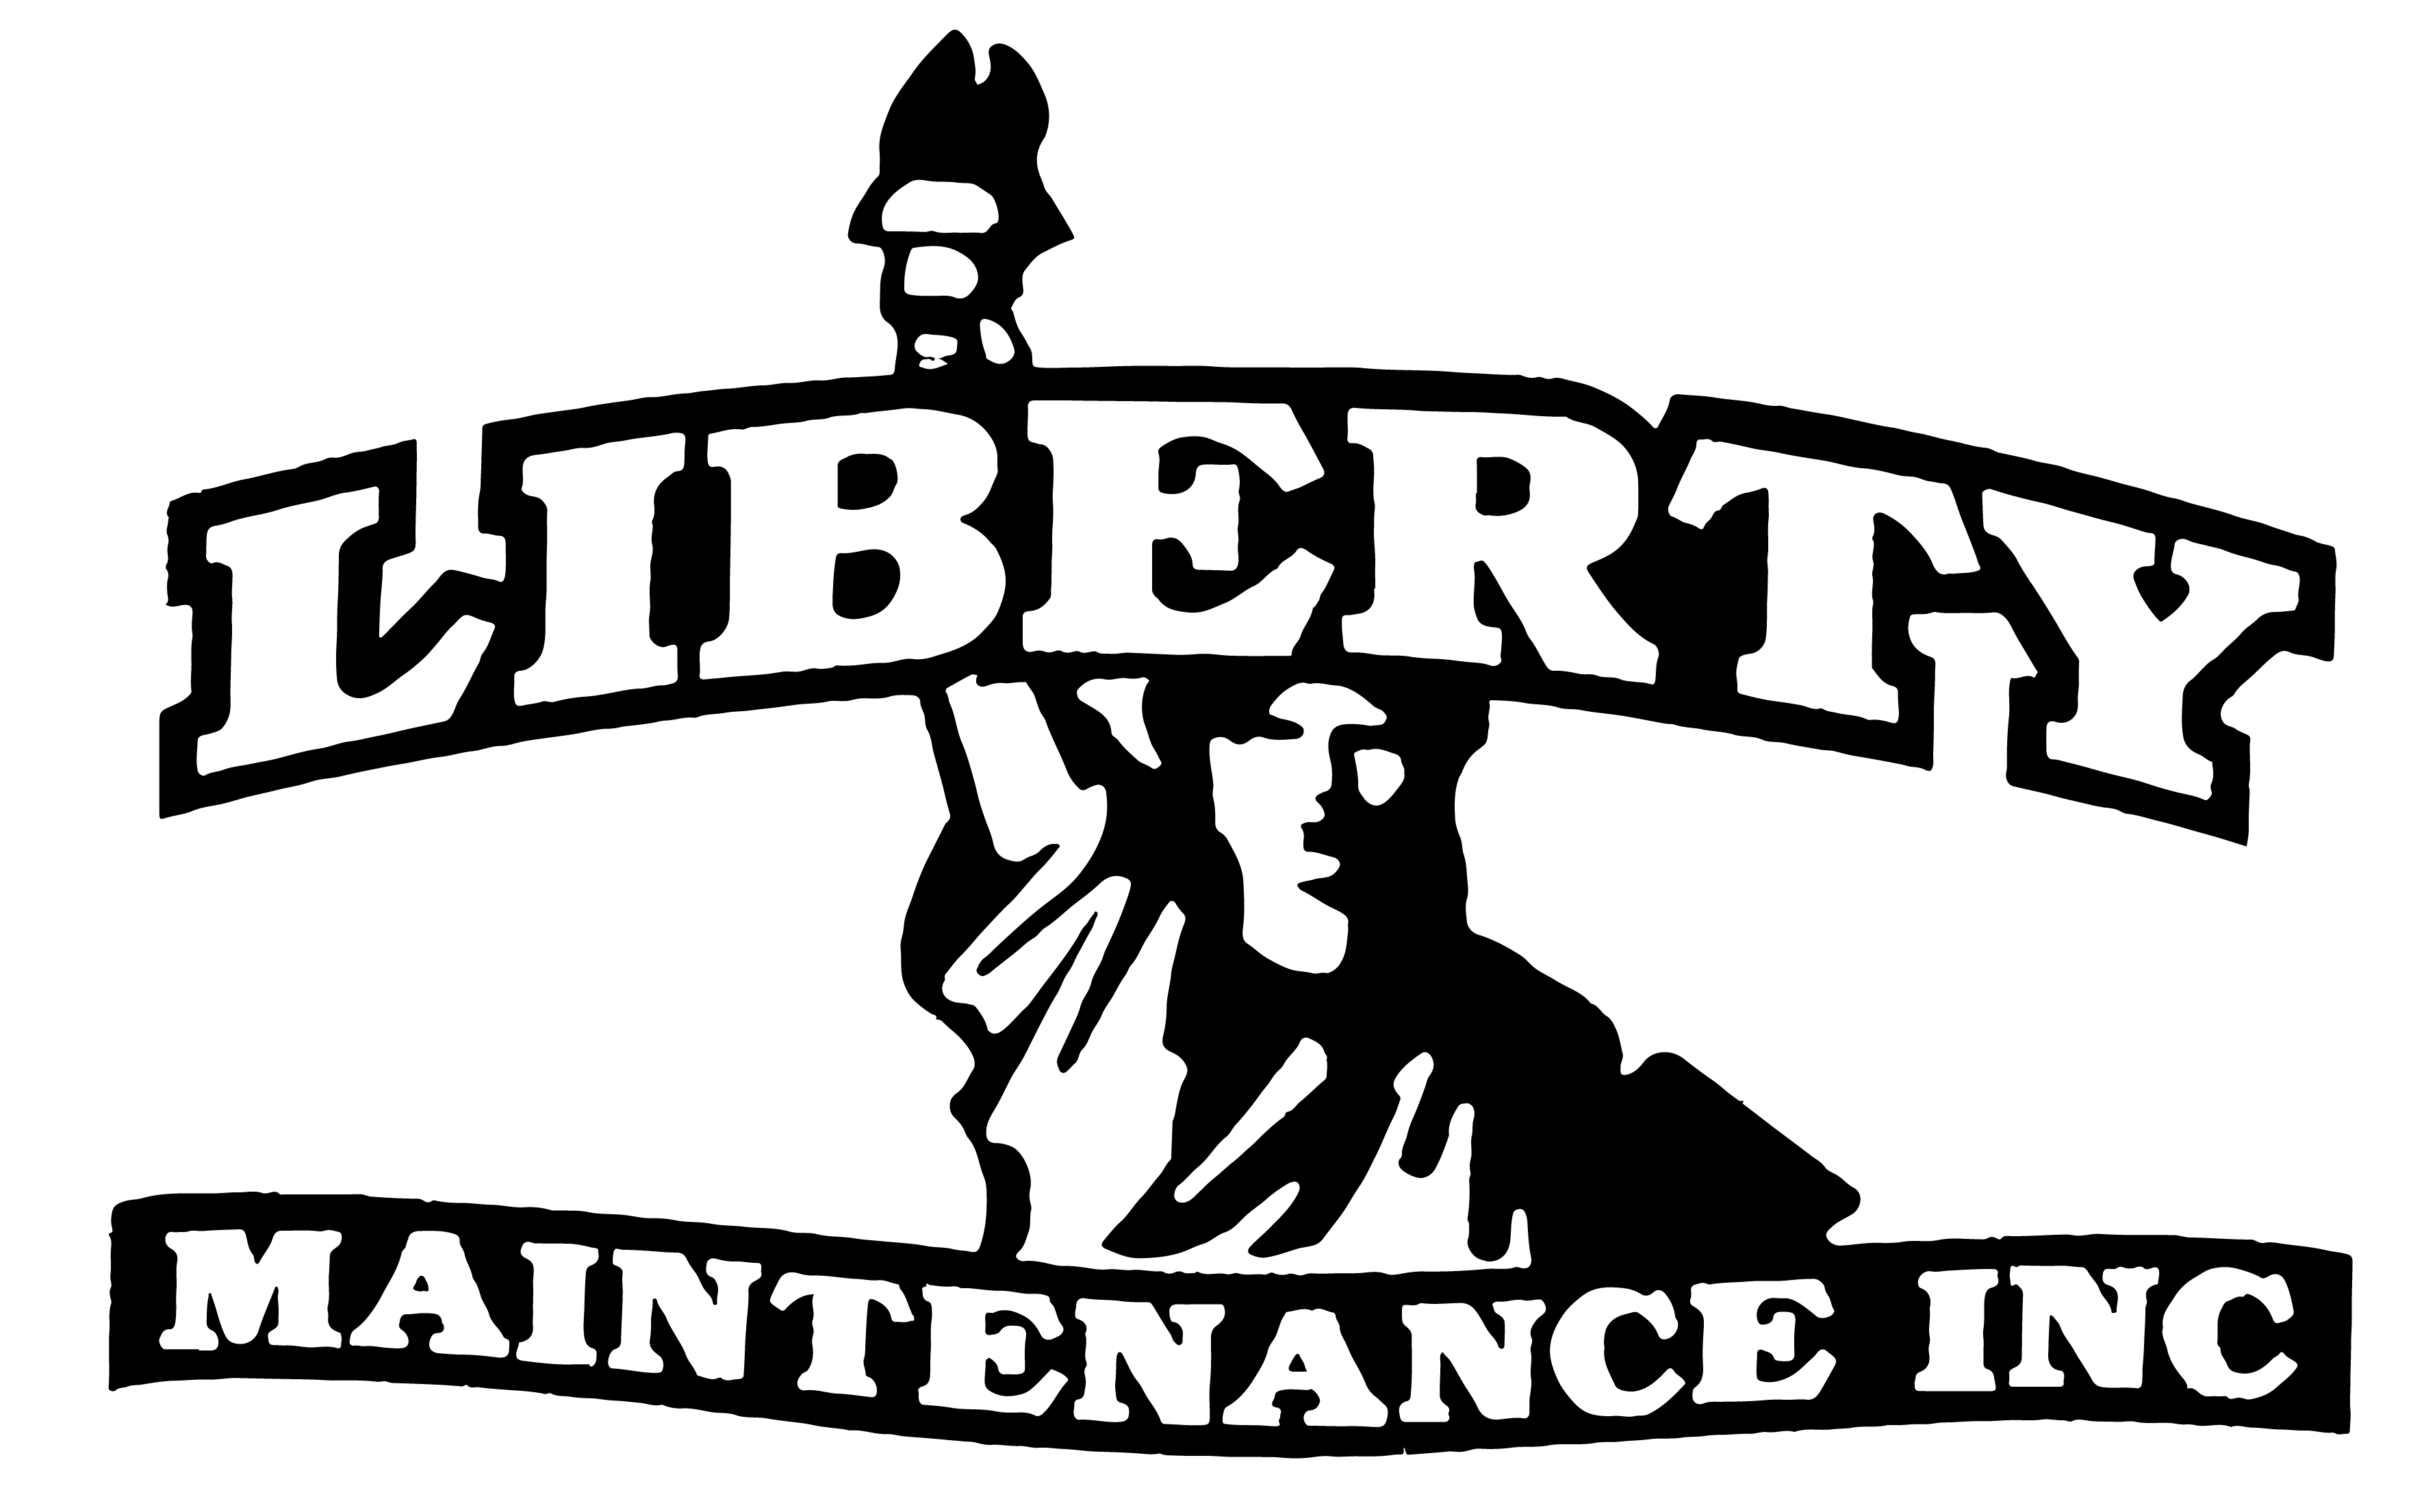 Black and white Liberty Maintenance Inc logo